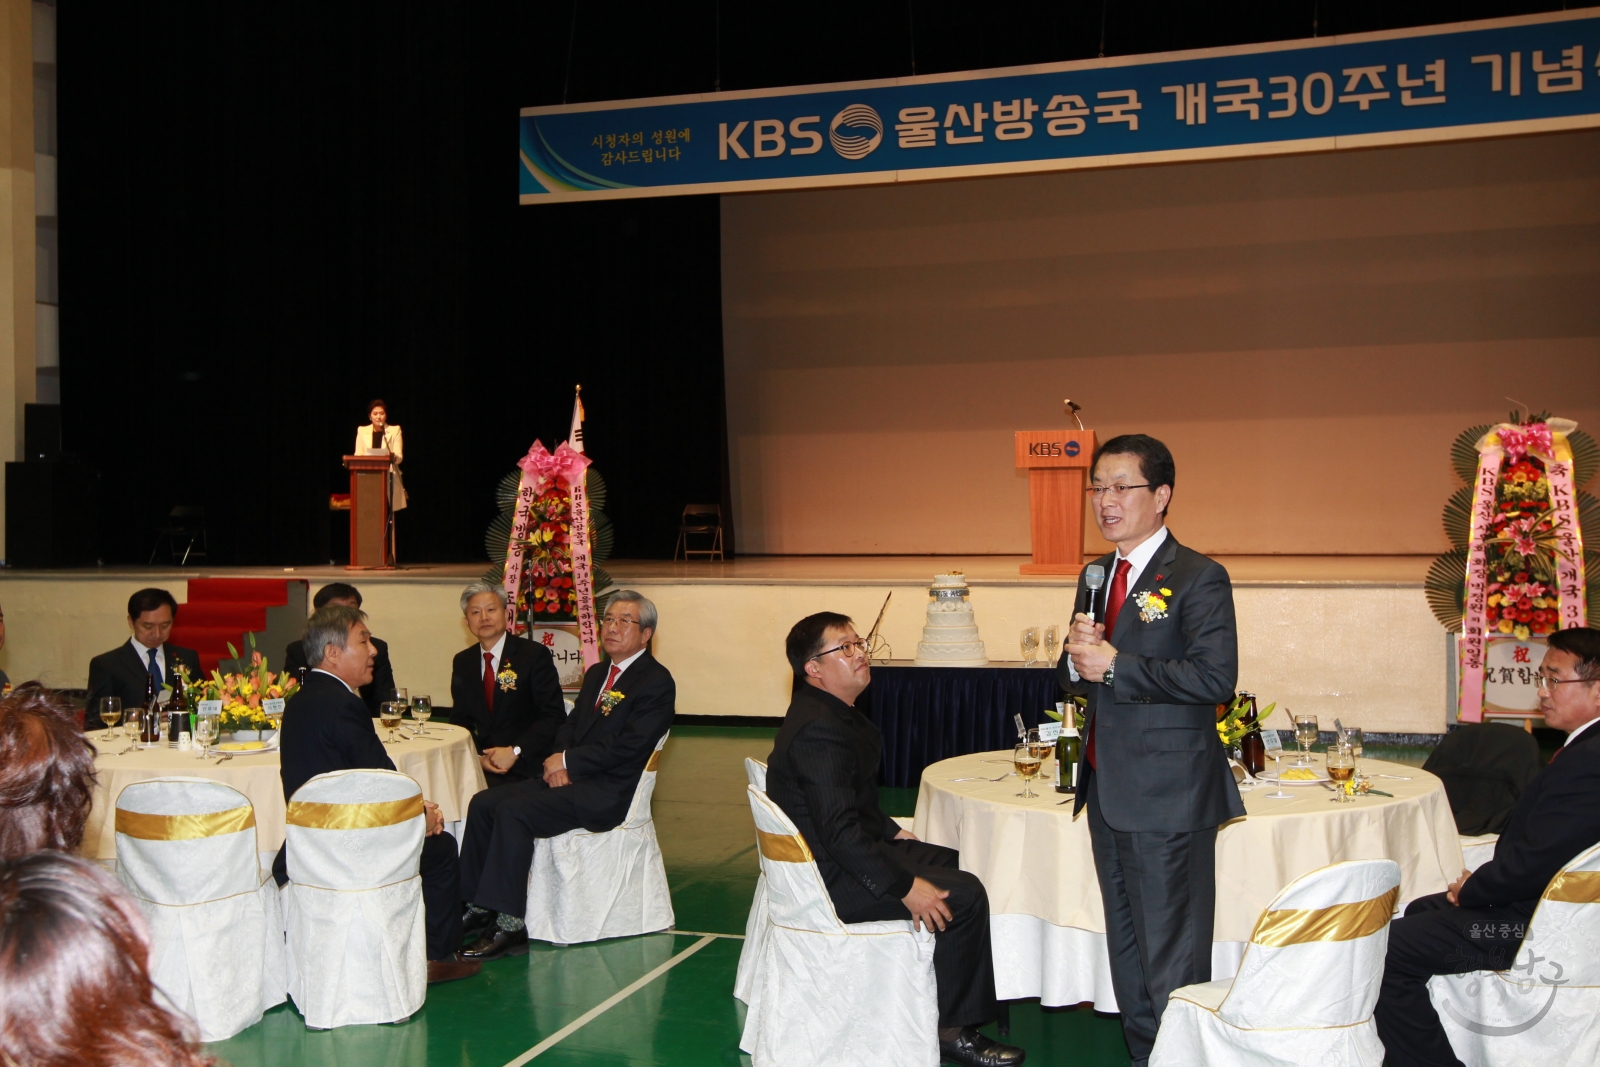 KBS울산방송국 개국30주년 기념식 의 사진